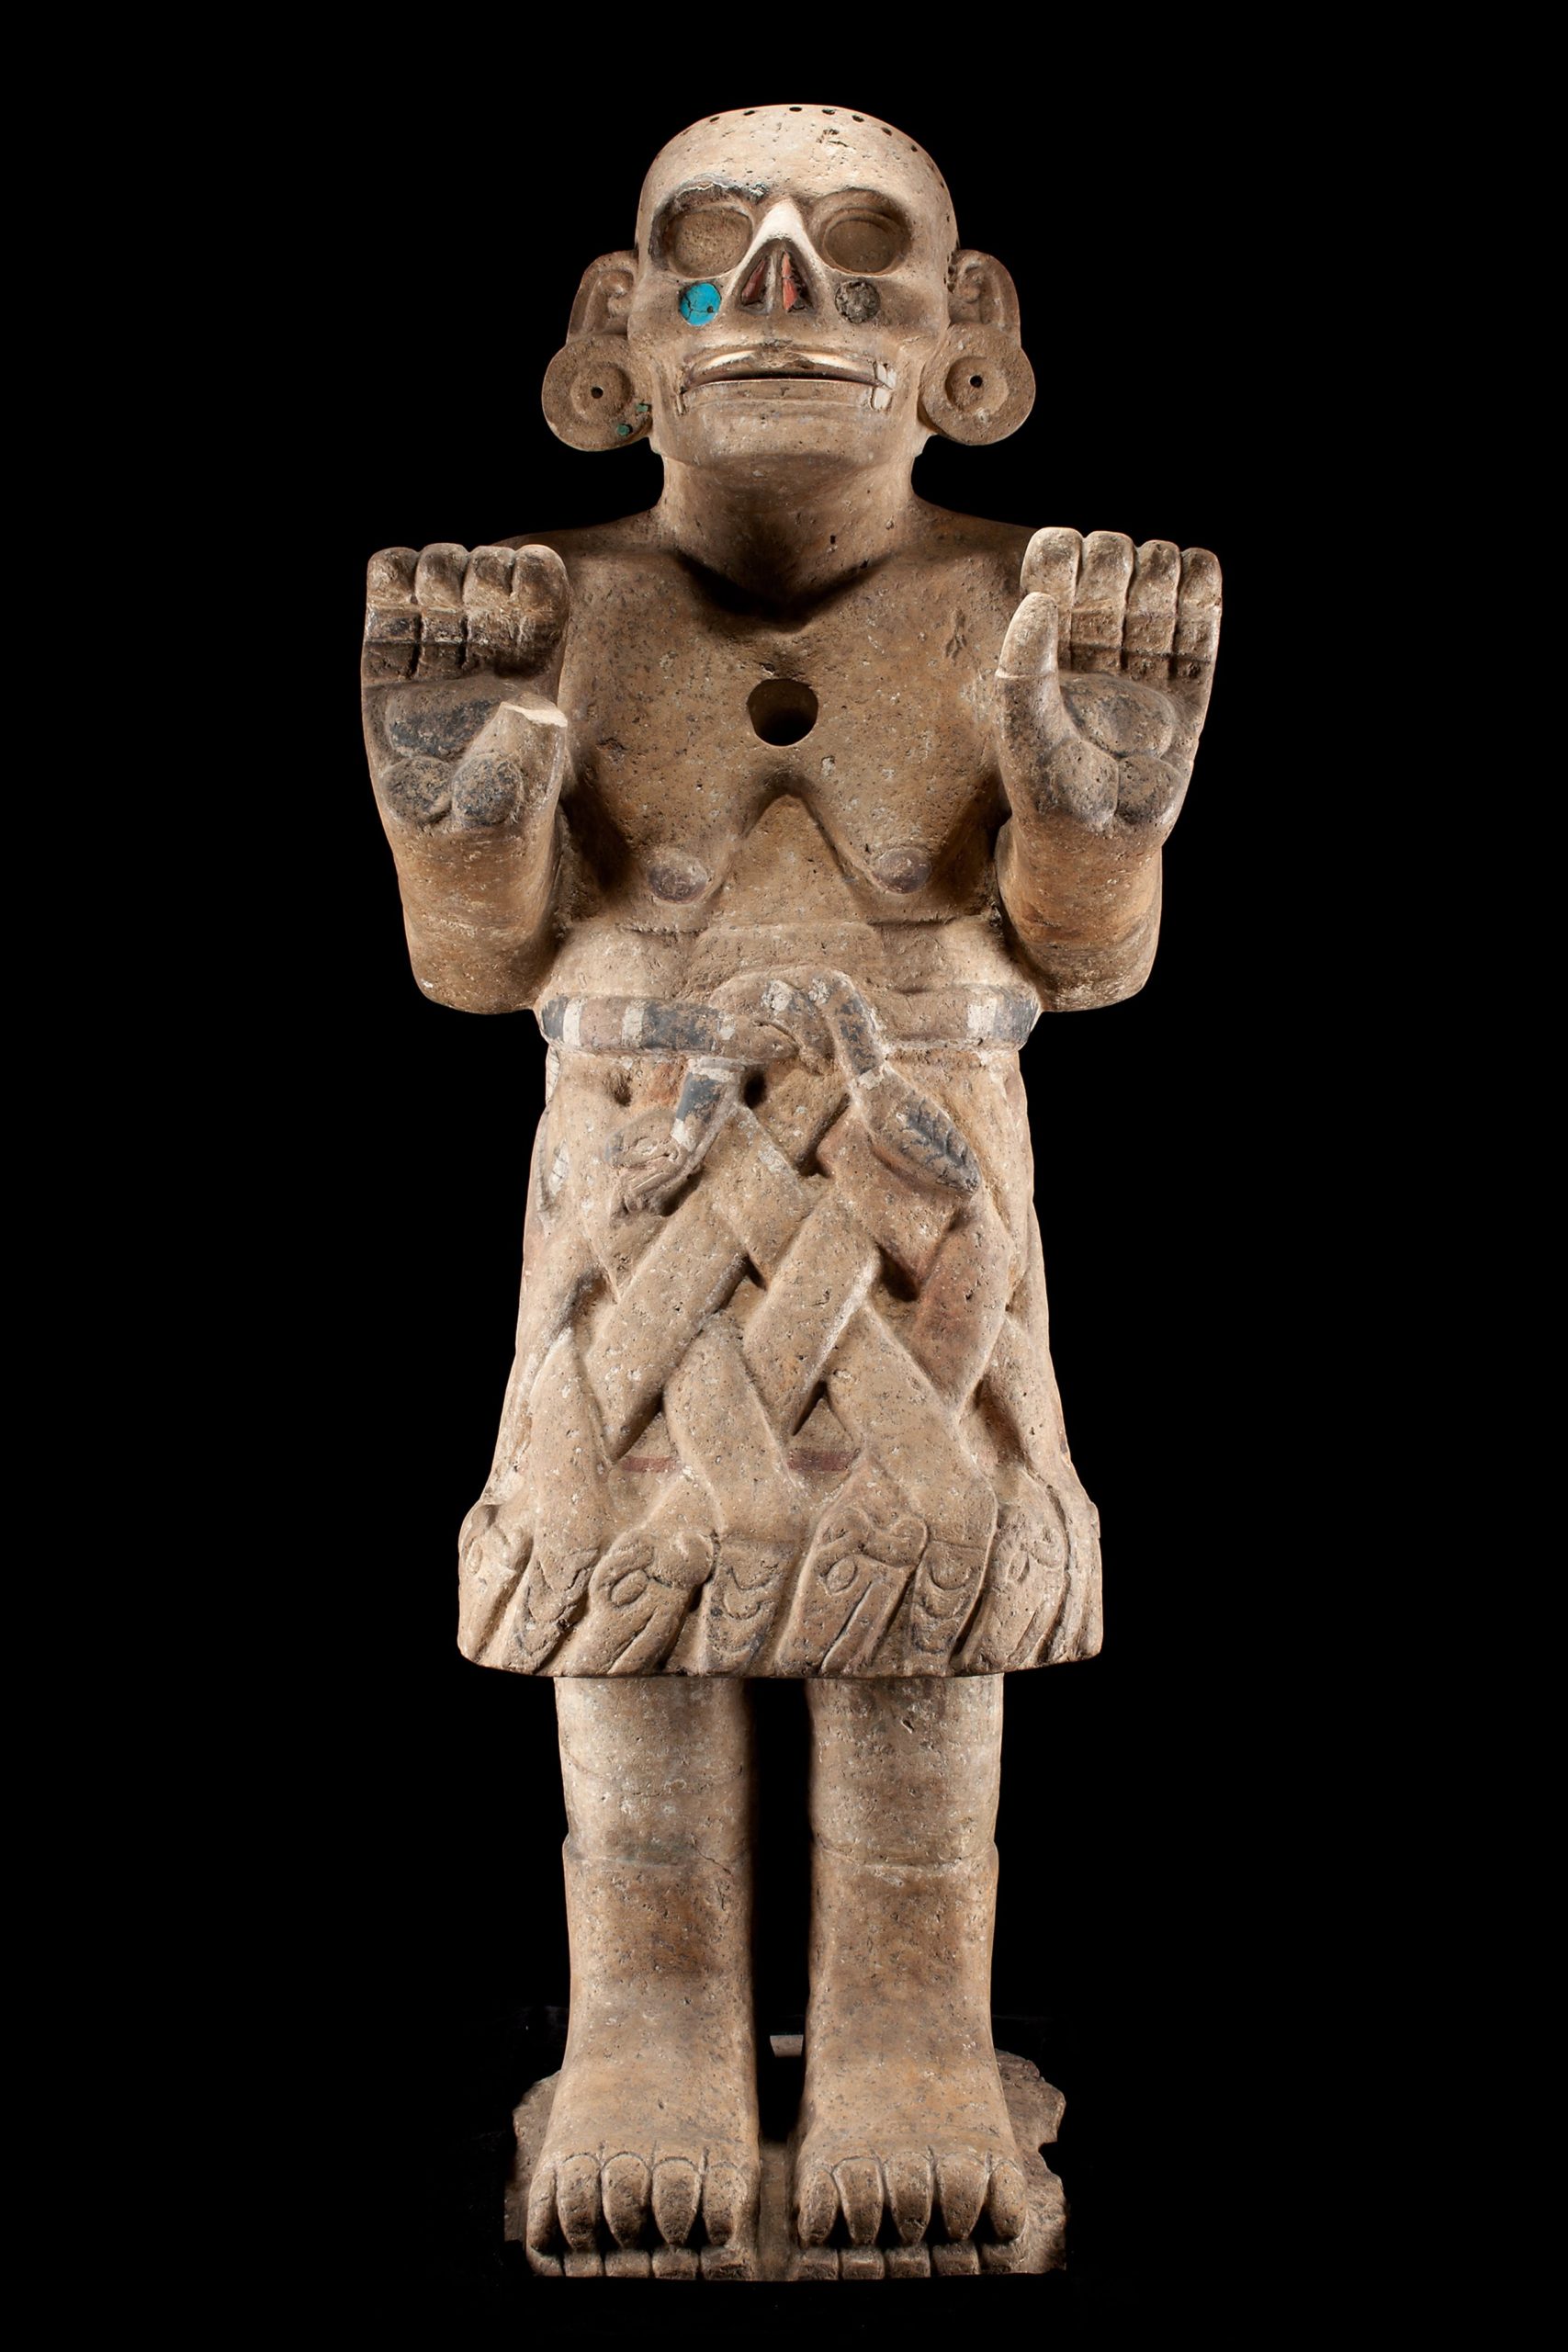 Coatlicue de Cozcatlán, c. 1500, Mexica (Aztec), 115 cm high (National Museum of Anthropology, Mexico City; photo: Google Arts & Culture)